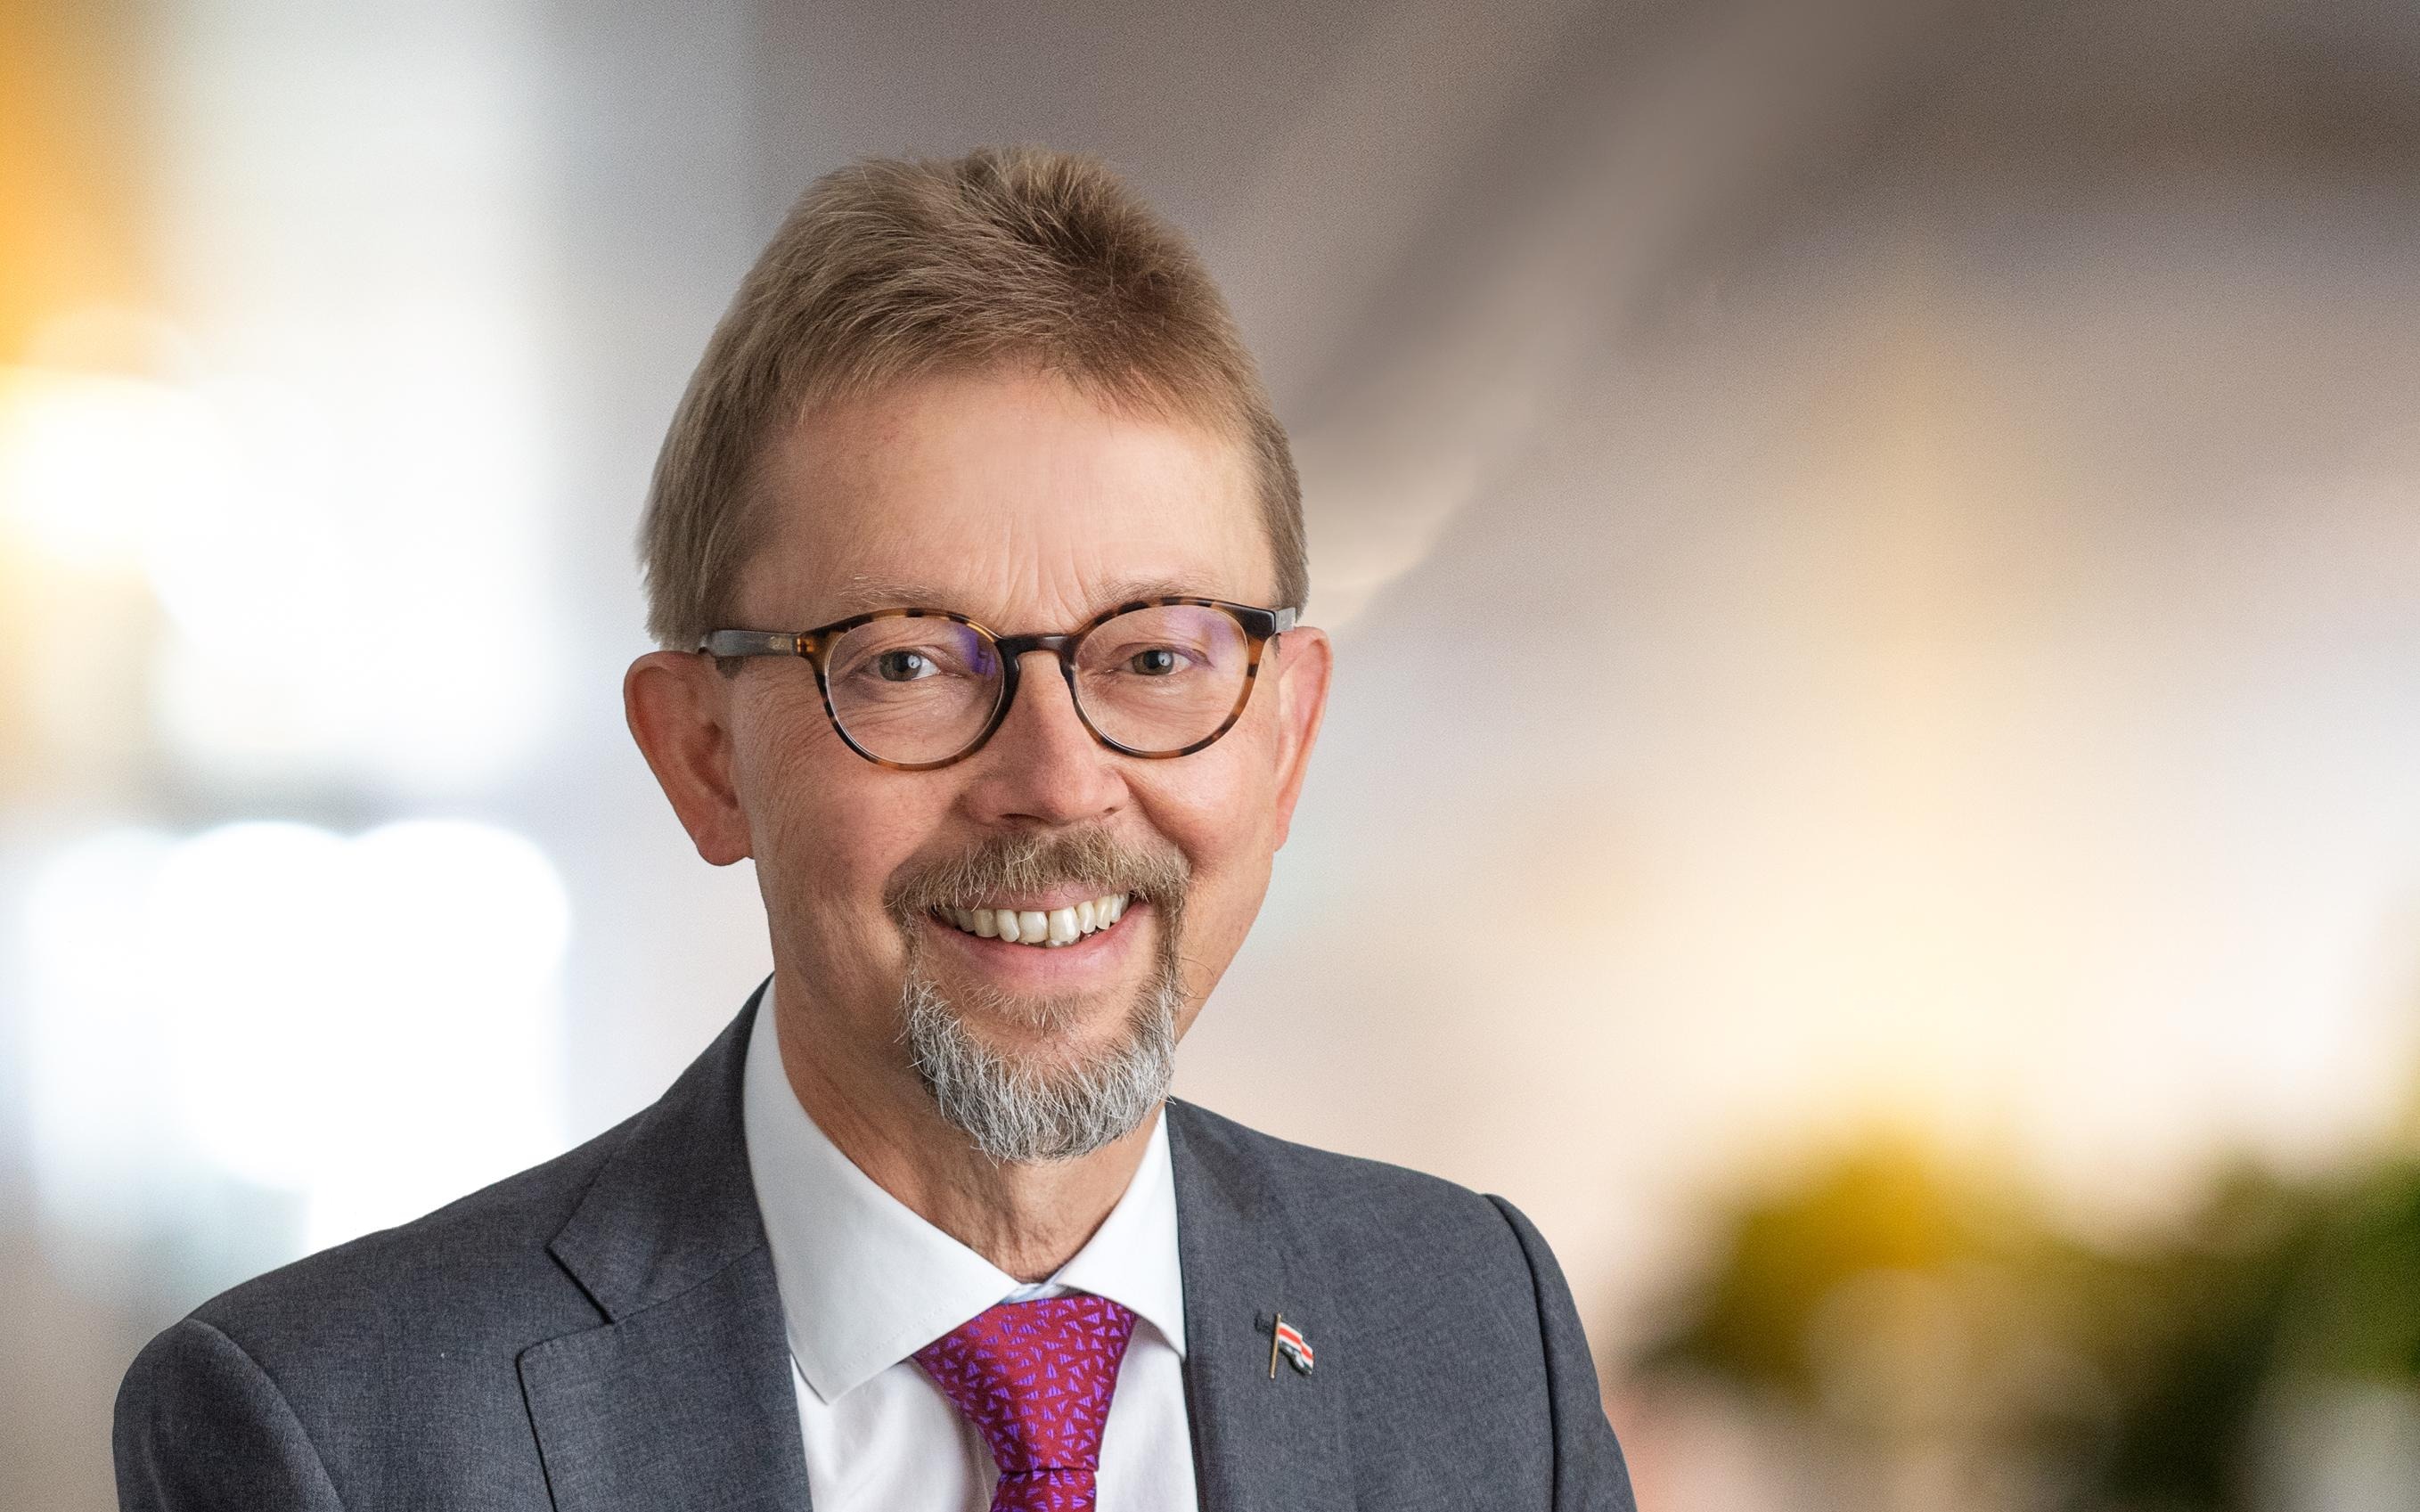 Styrelseledamot Lars Erik Fredriksson